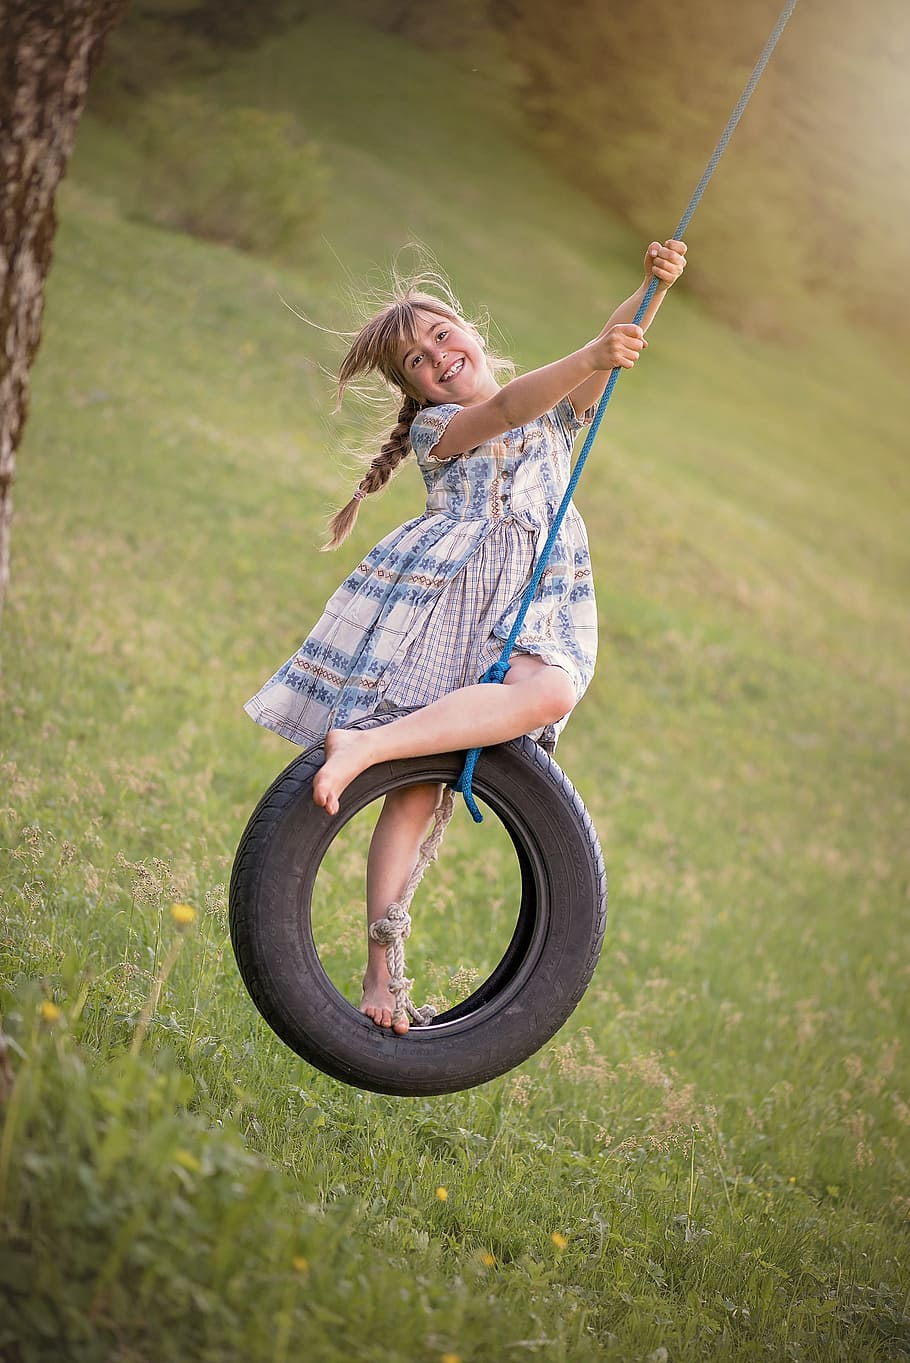 woman, wearing, blue, gray, dress, rubber tire swing, person, human, child, girl